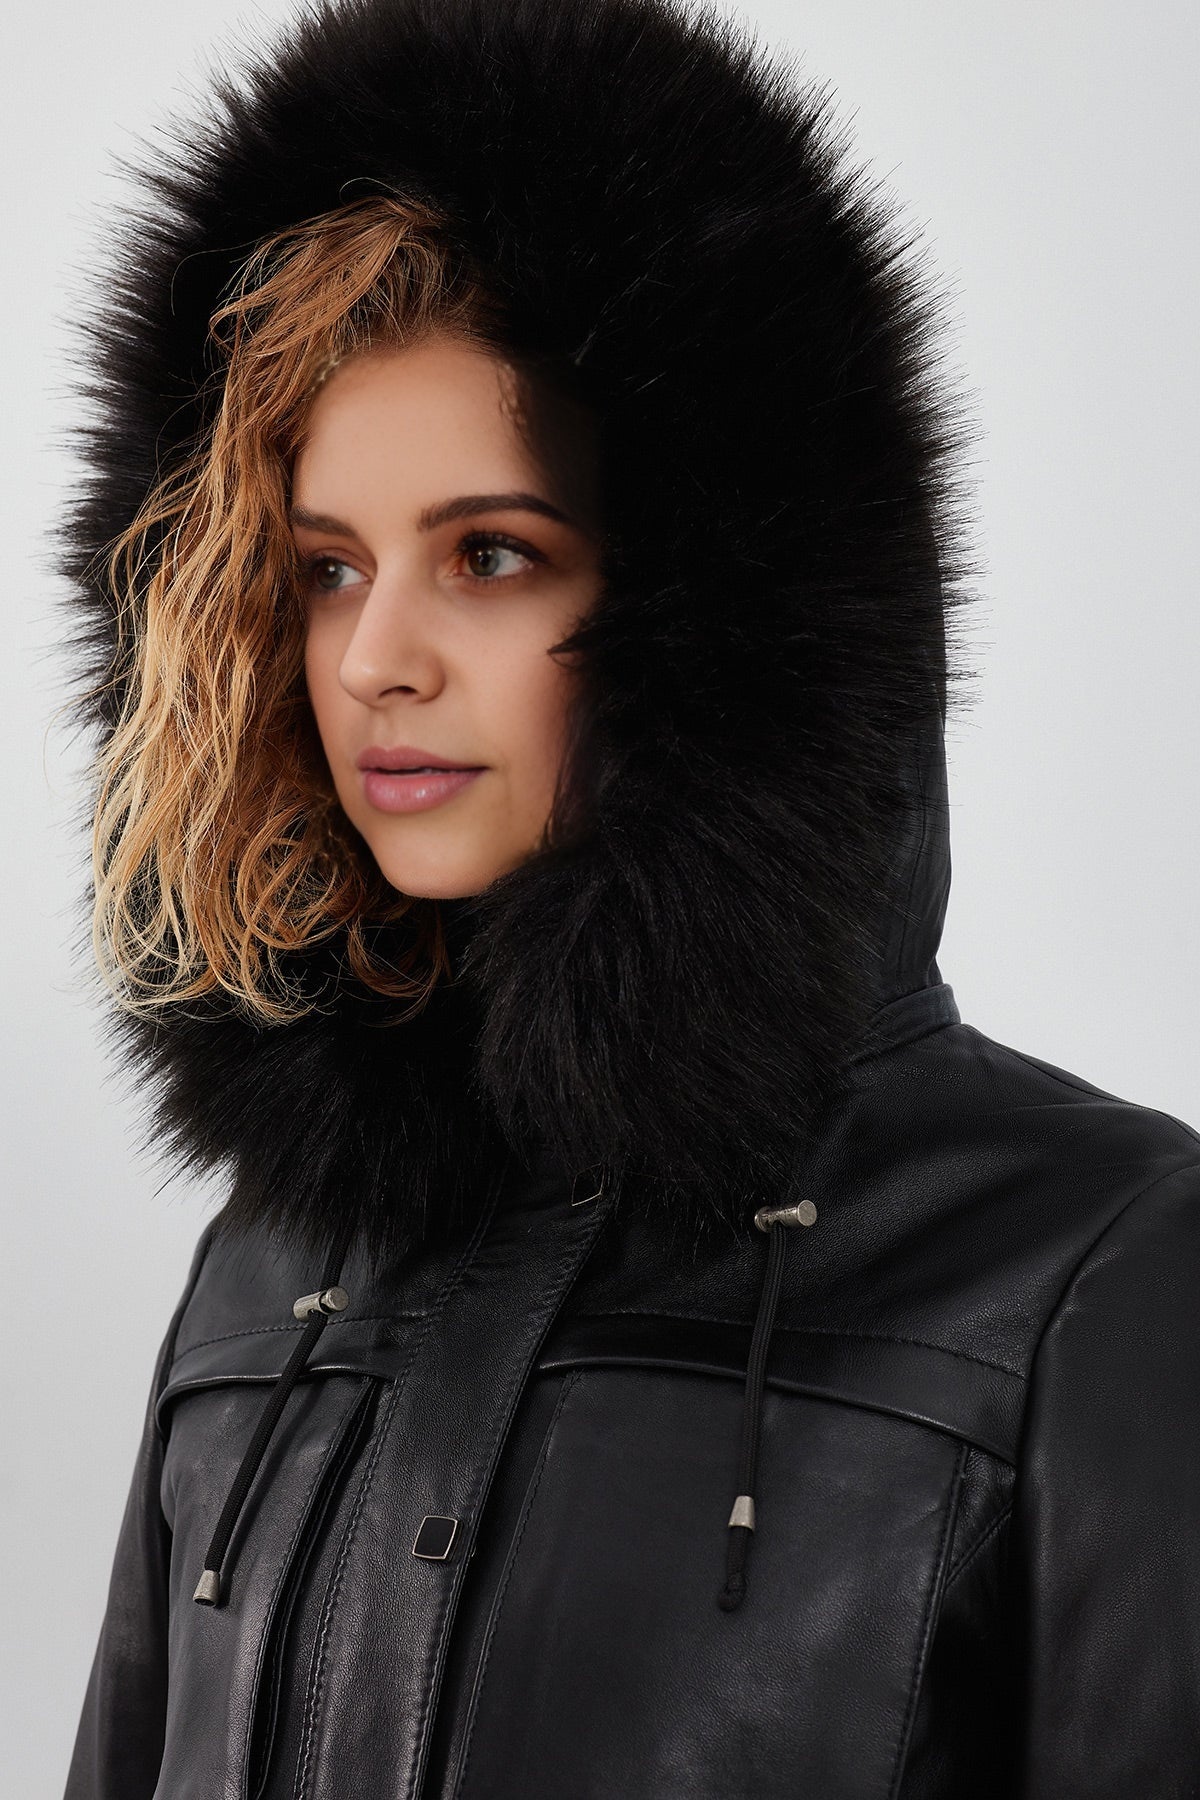 Elenor Women's Black Leather Hooded Coat